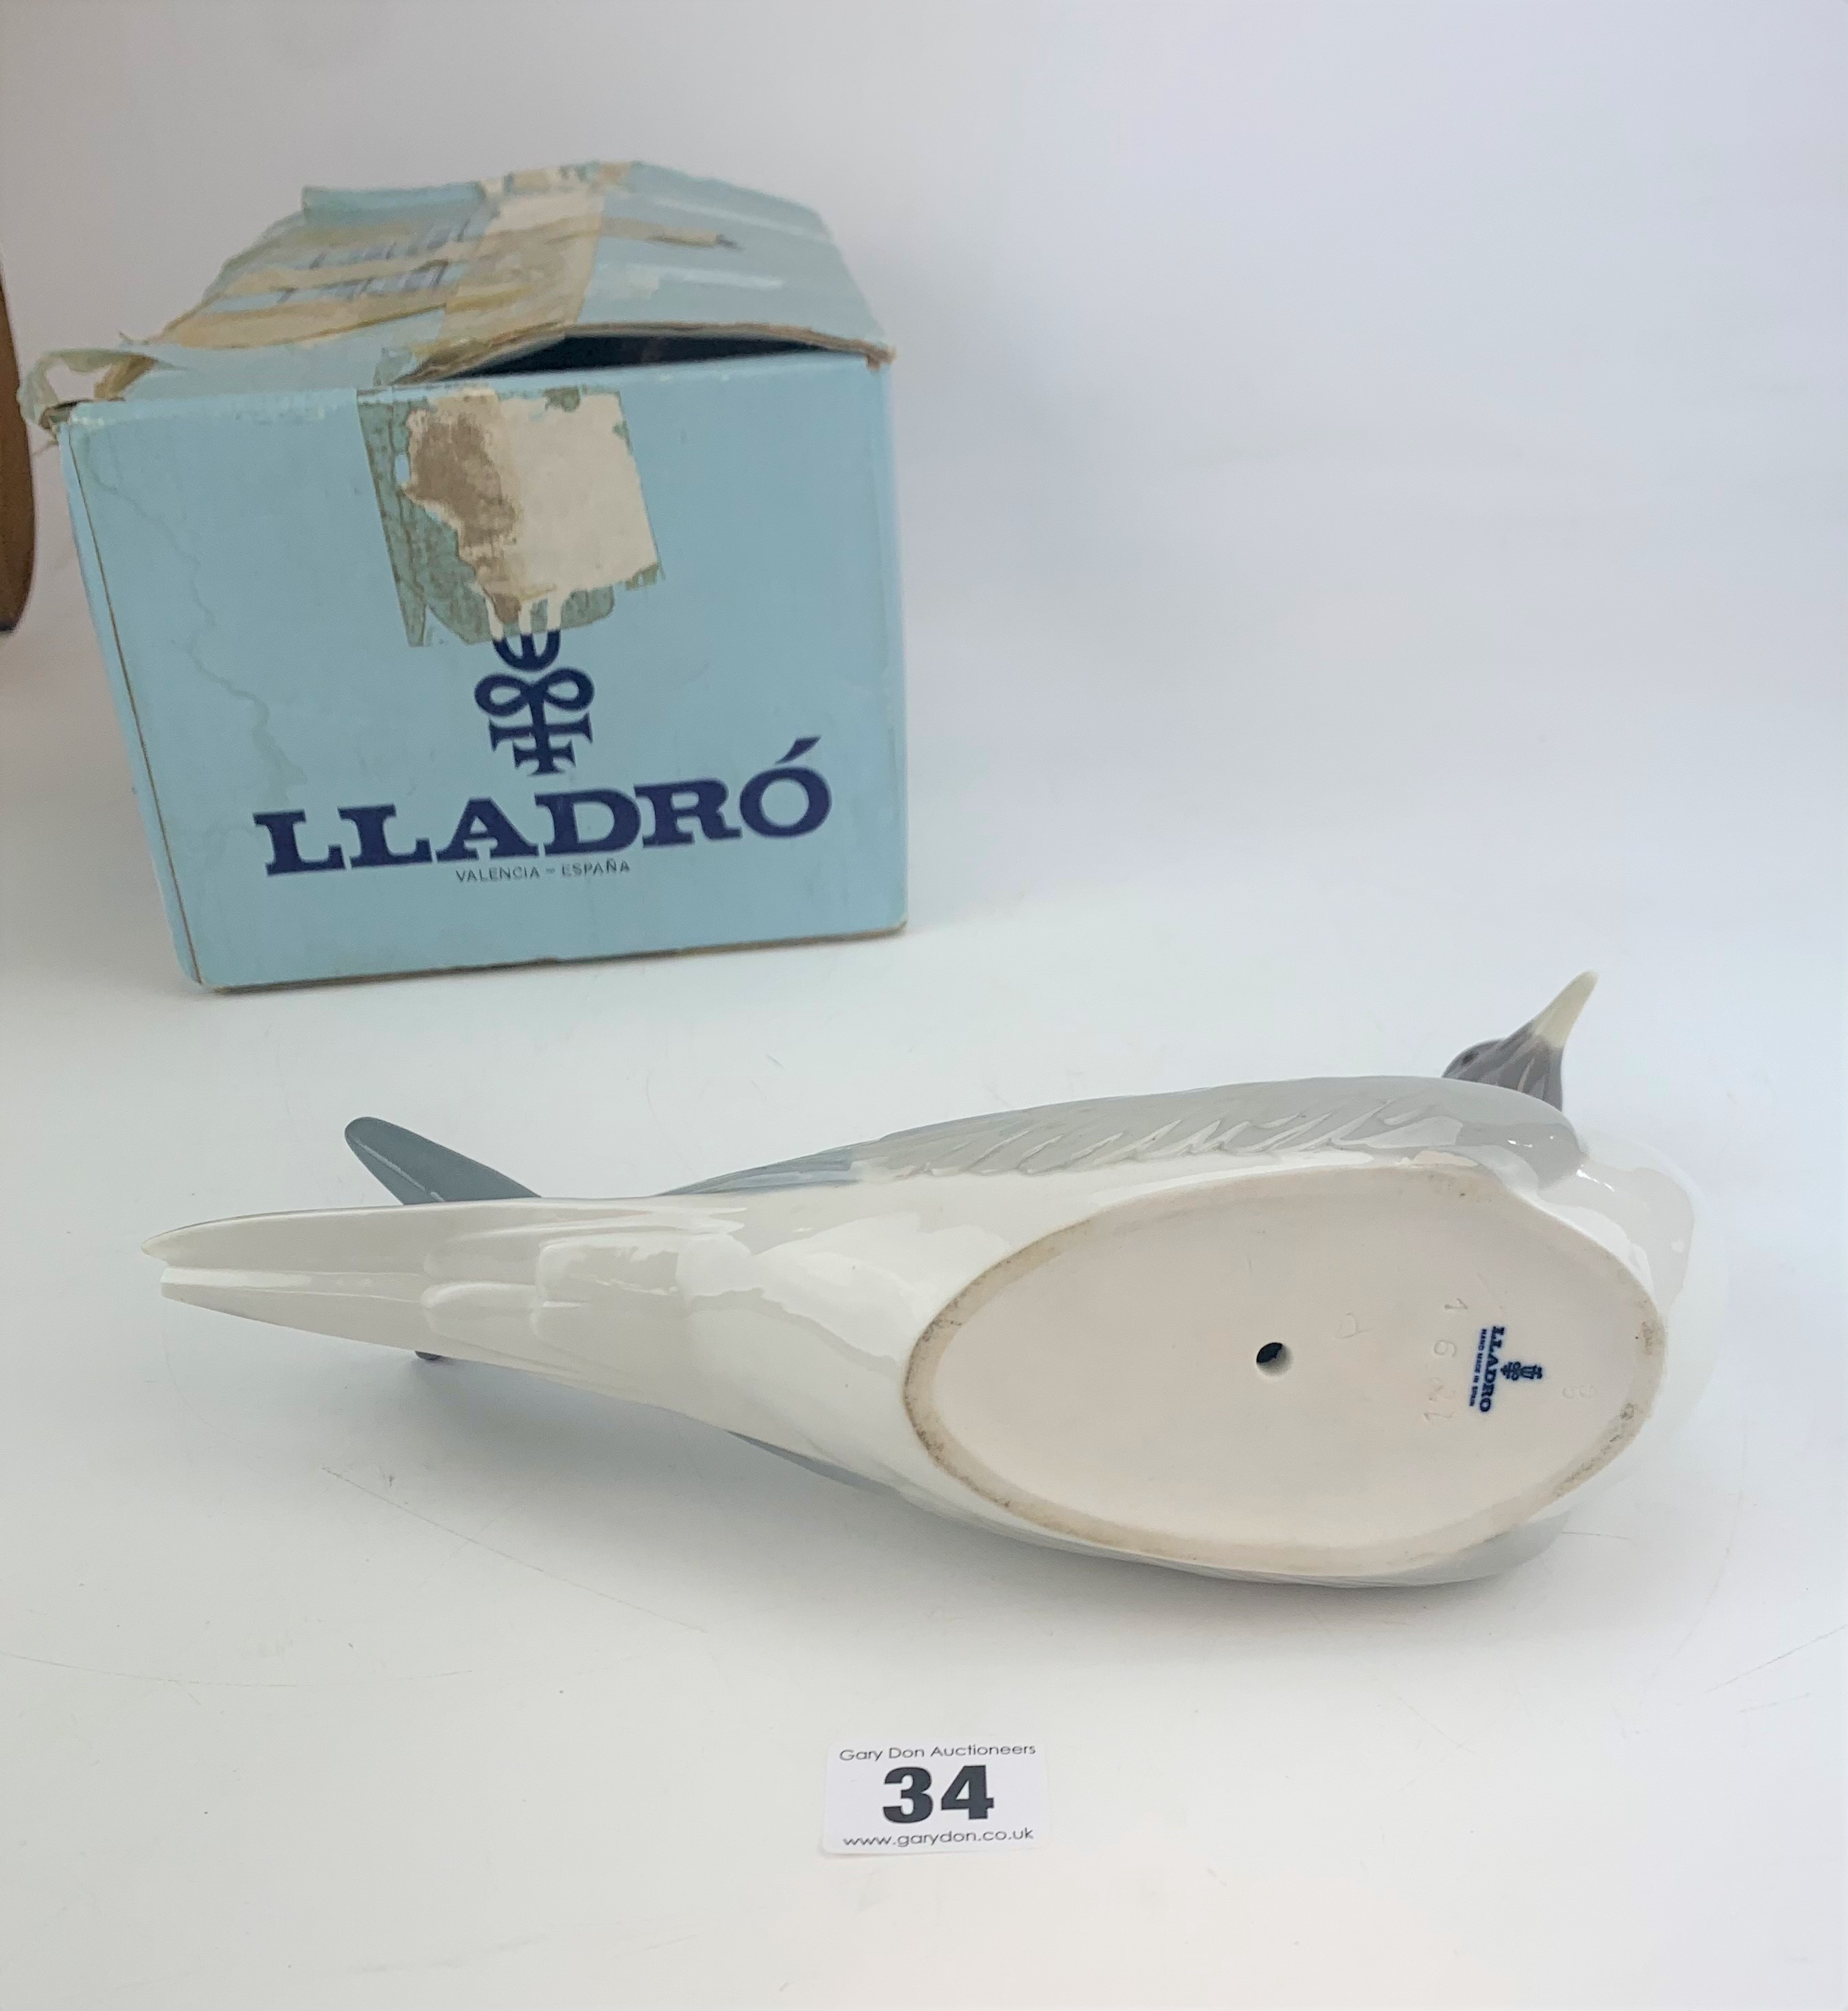 Lladro bird figure in box - Image 4 of 4